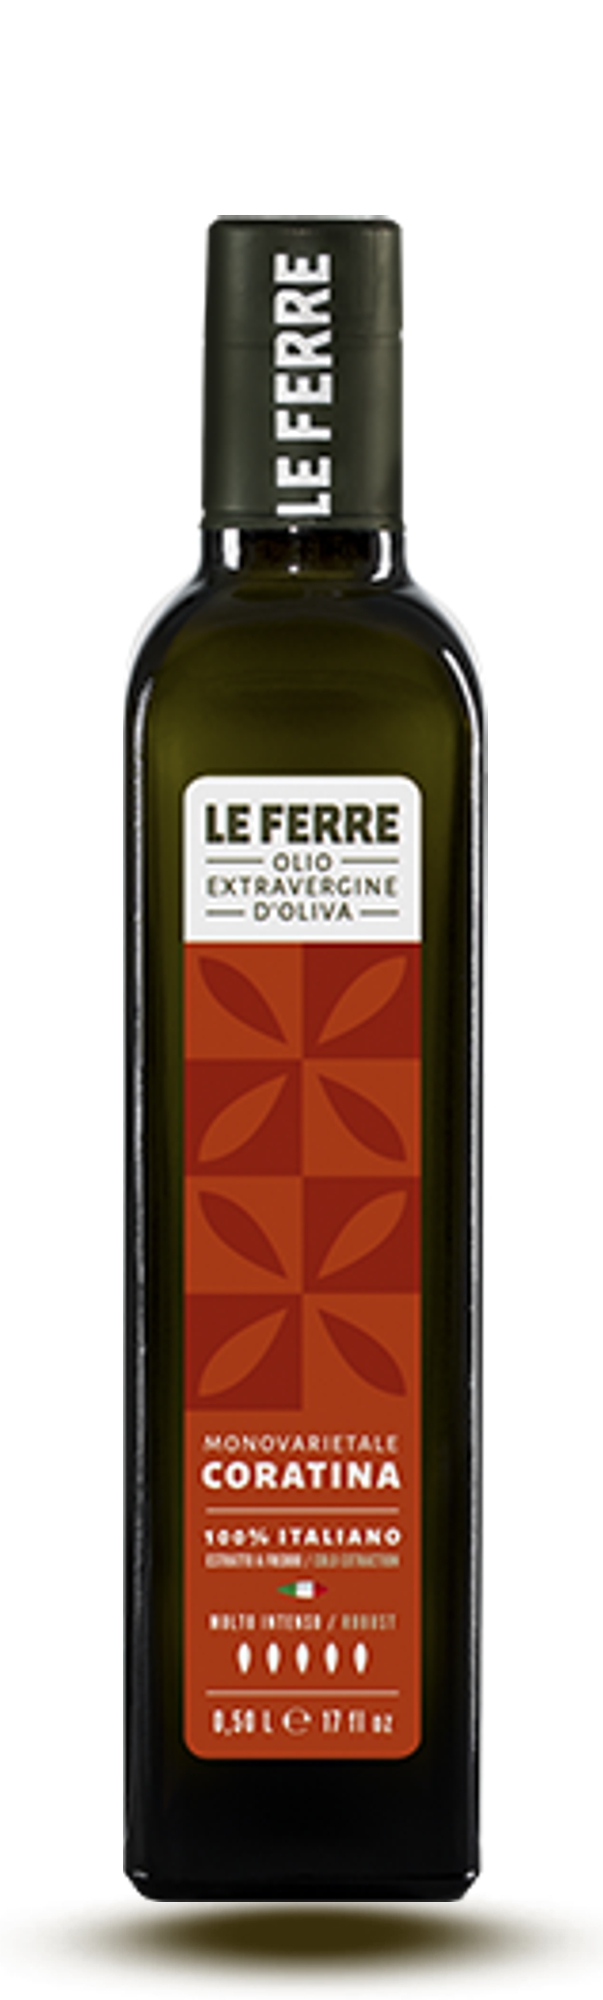 Le Ferre, CORATINA Monovarietale olio extravergine d'oliva 500 ml